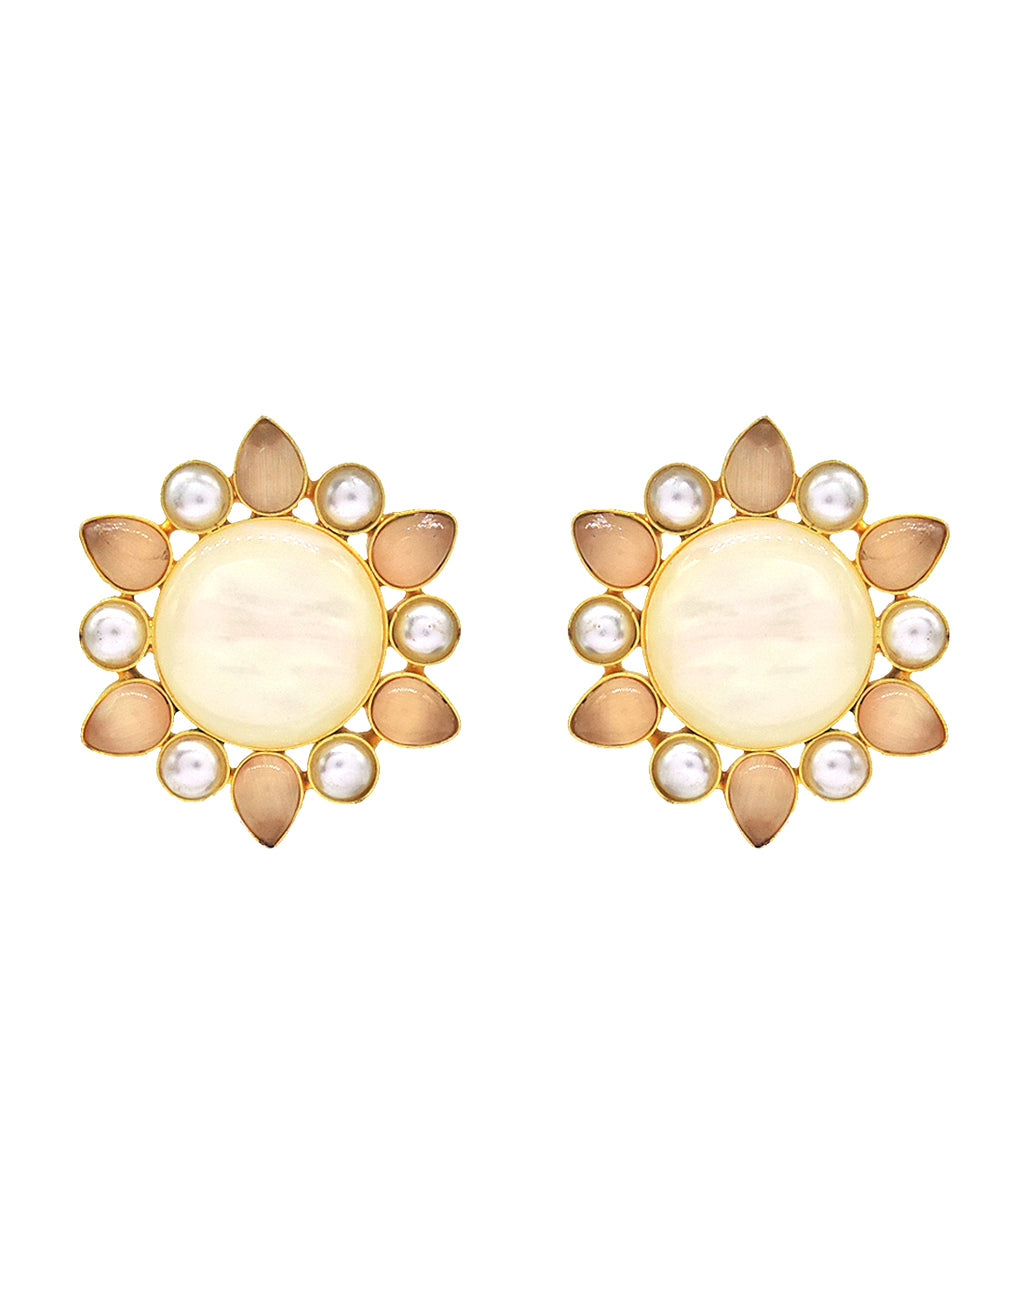 Star Flower Earrings - Statement Earrings - Gold-Plated & Hypoallergenic - Made in India - Dubai Jewellery - Dori